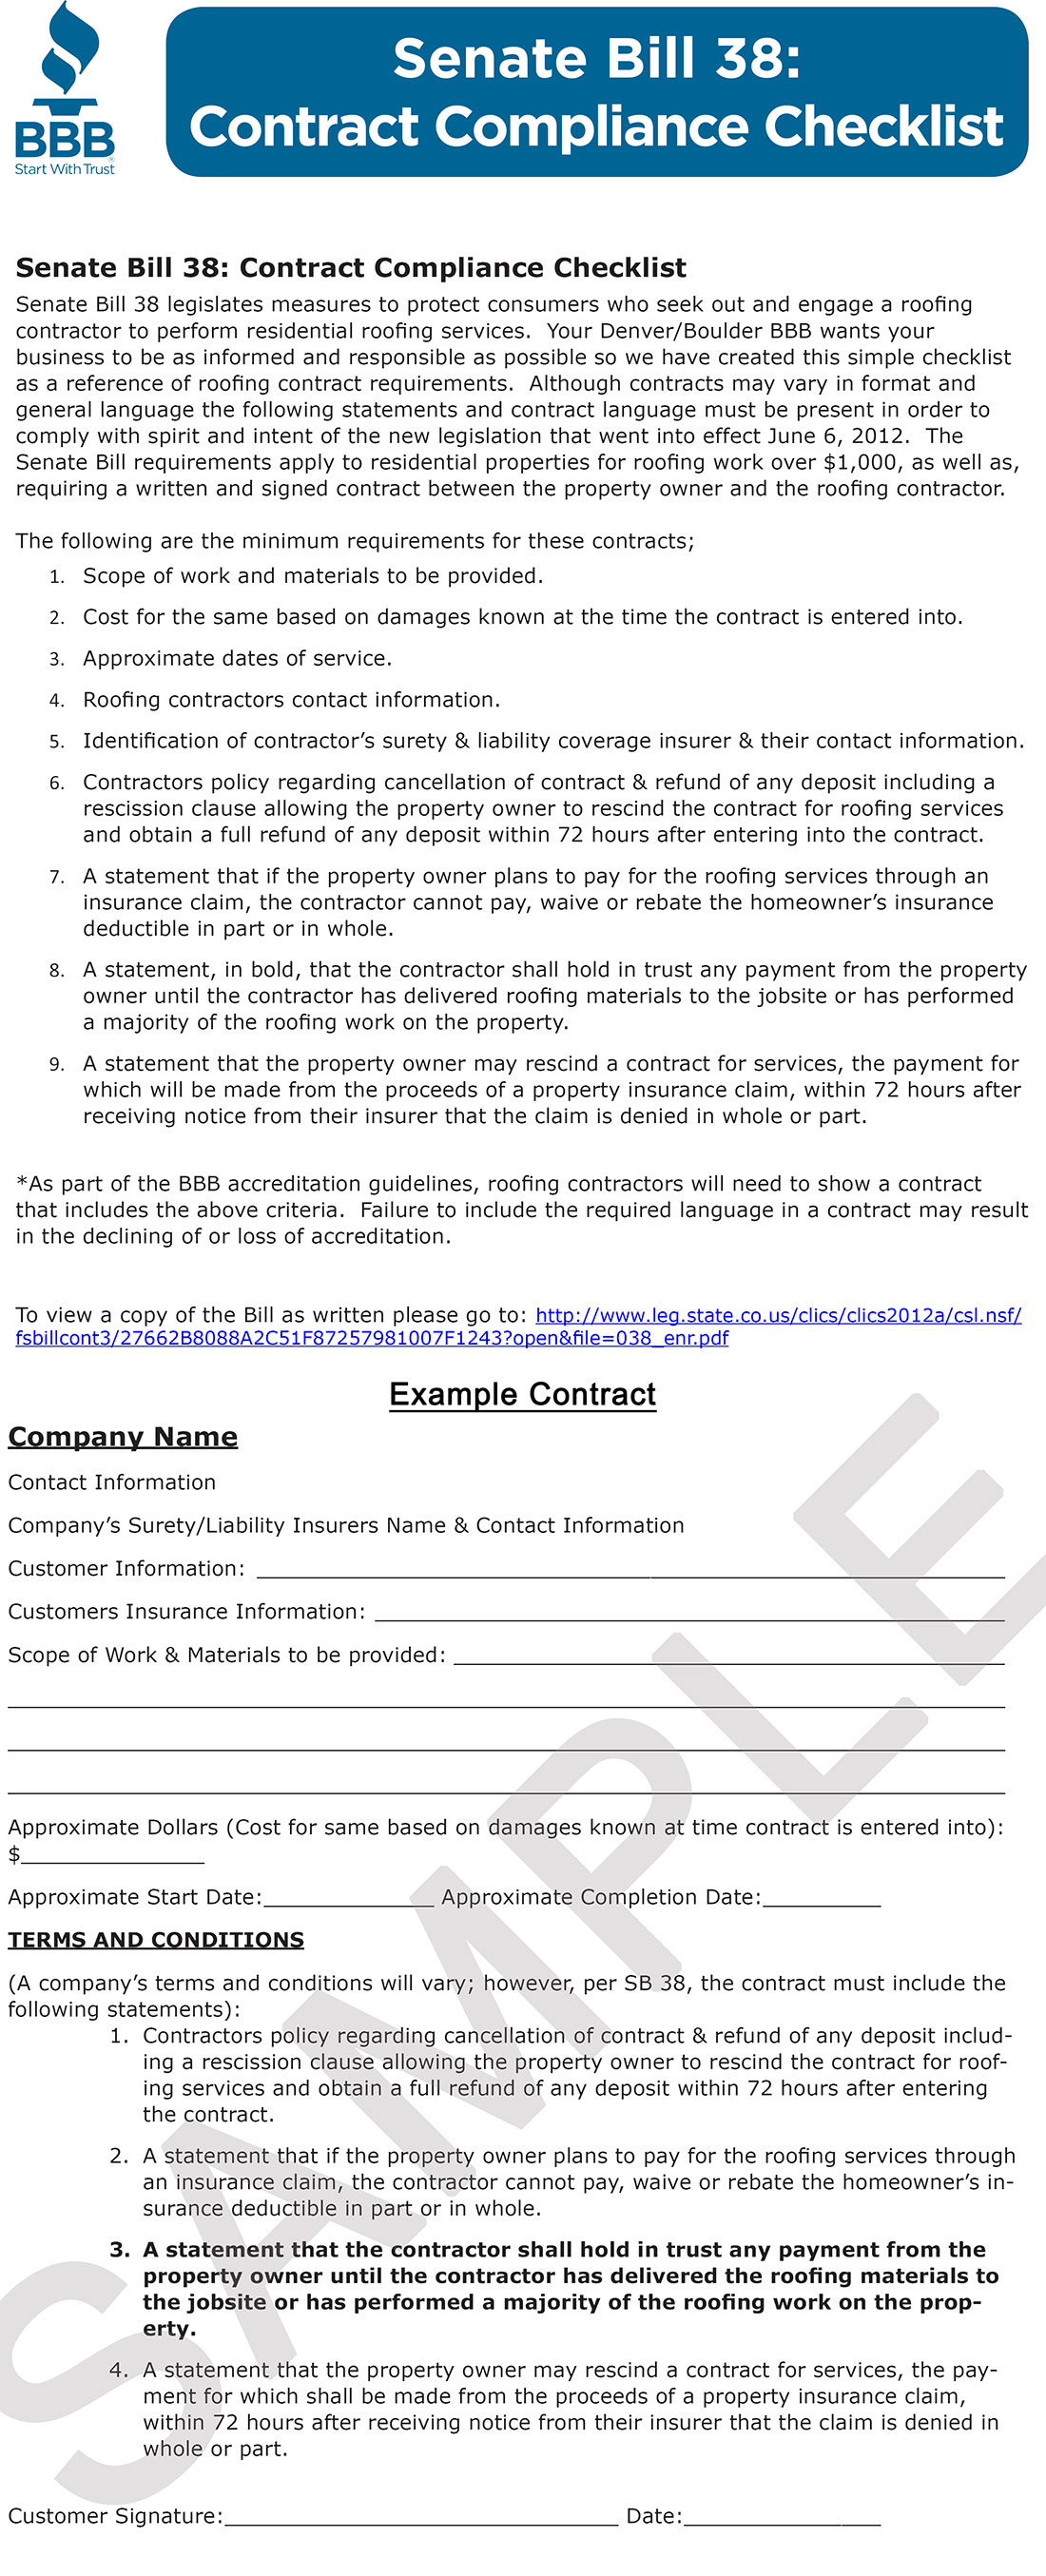 Contract Compliance Checklist